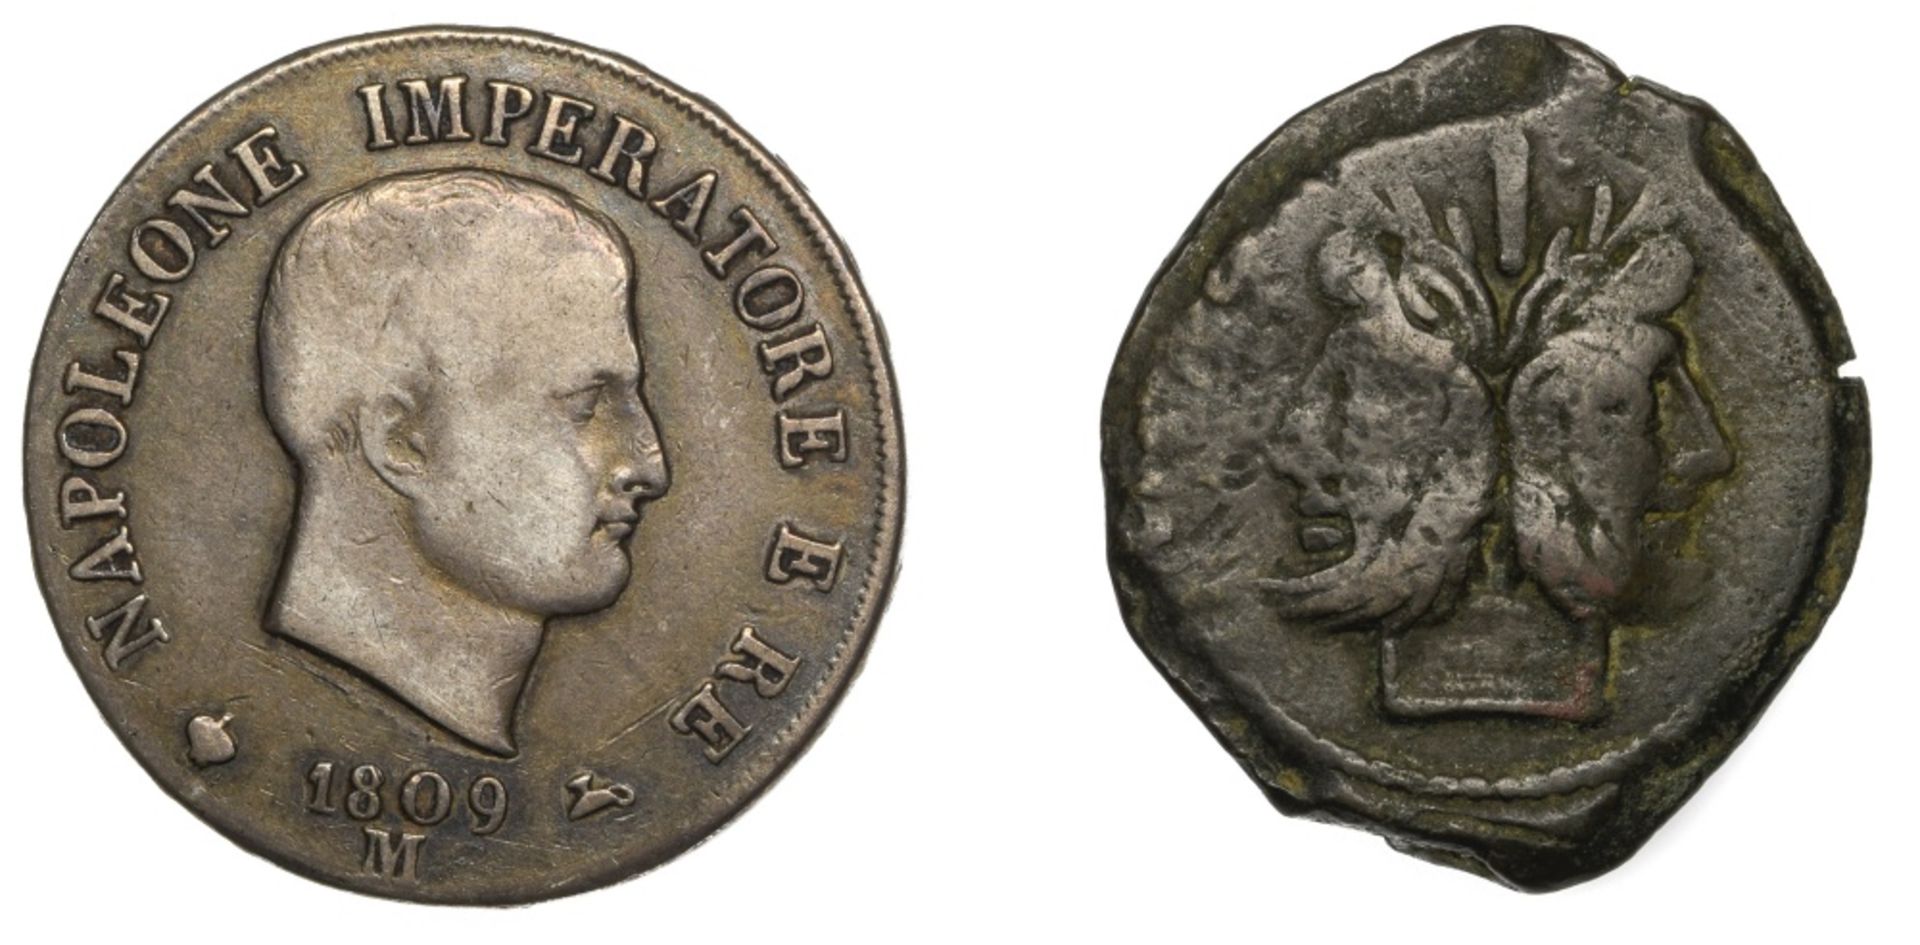 Italy, Kingdom of Napoleon Napoleon I (1805-1814), 5 Lire, 24.73g, 1809 M, Milan, raised edge (Gig. - Image 2 of 3